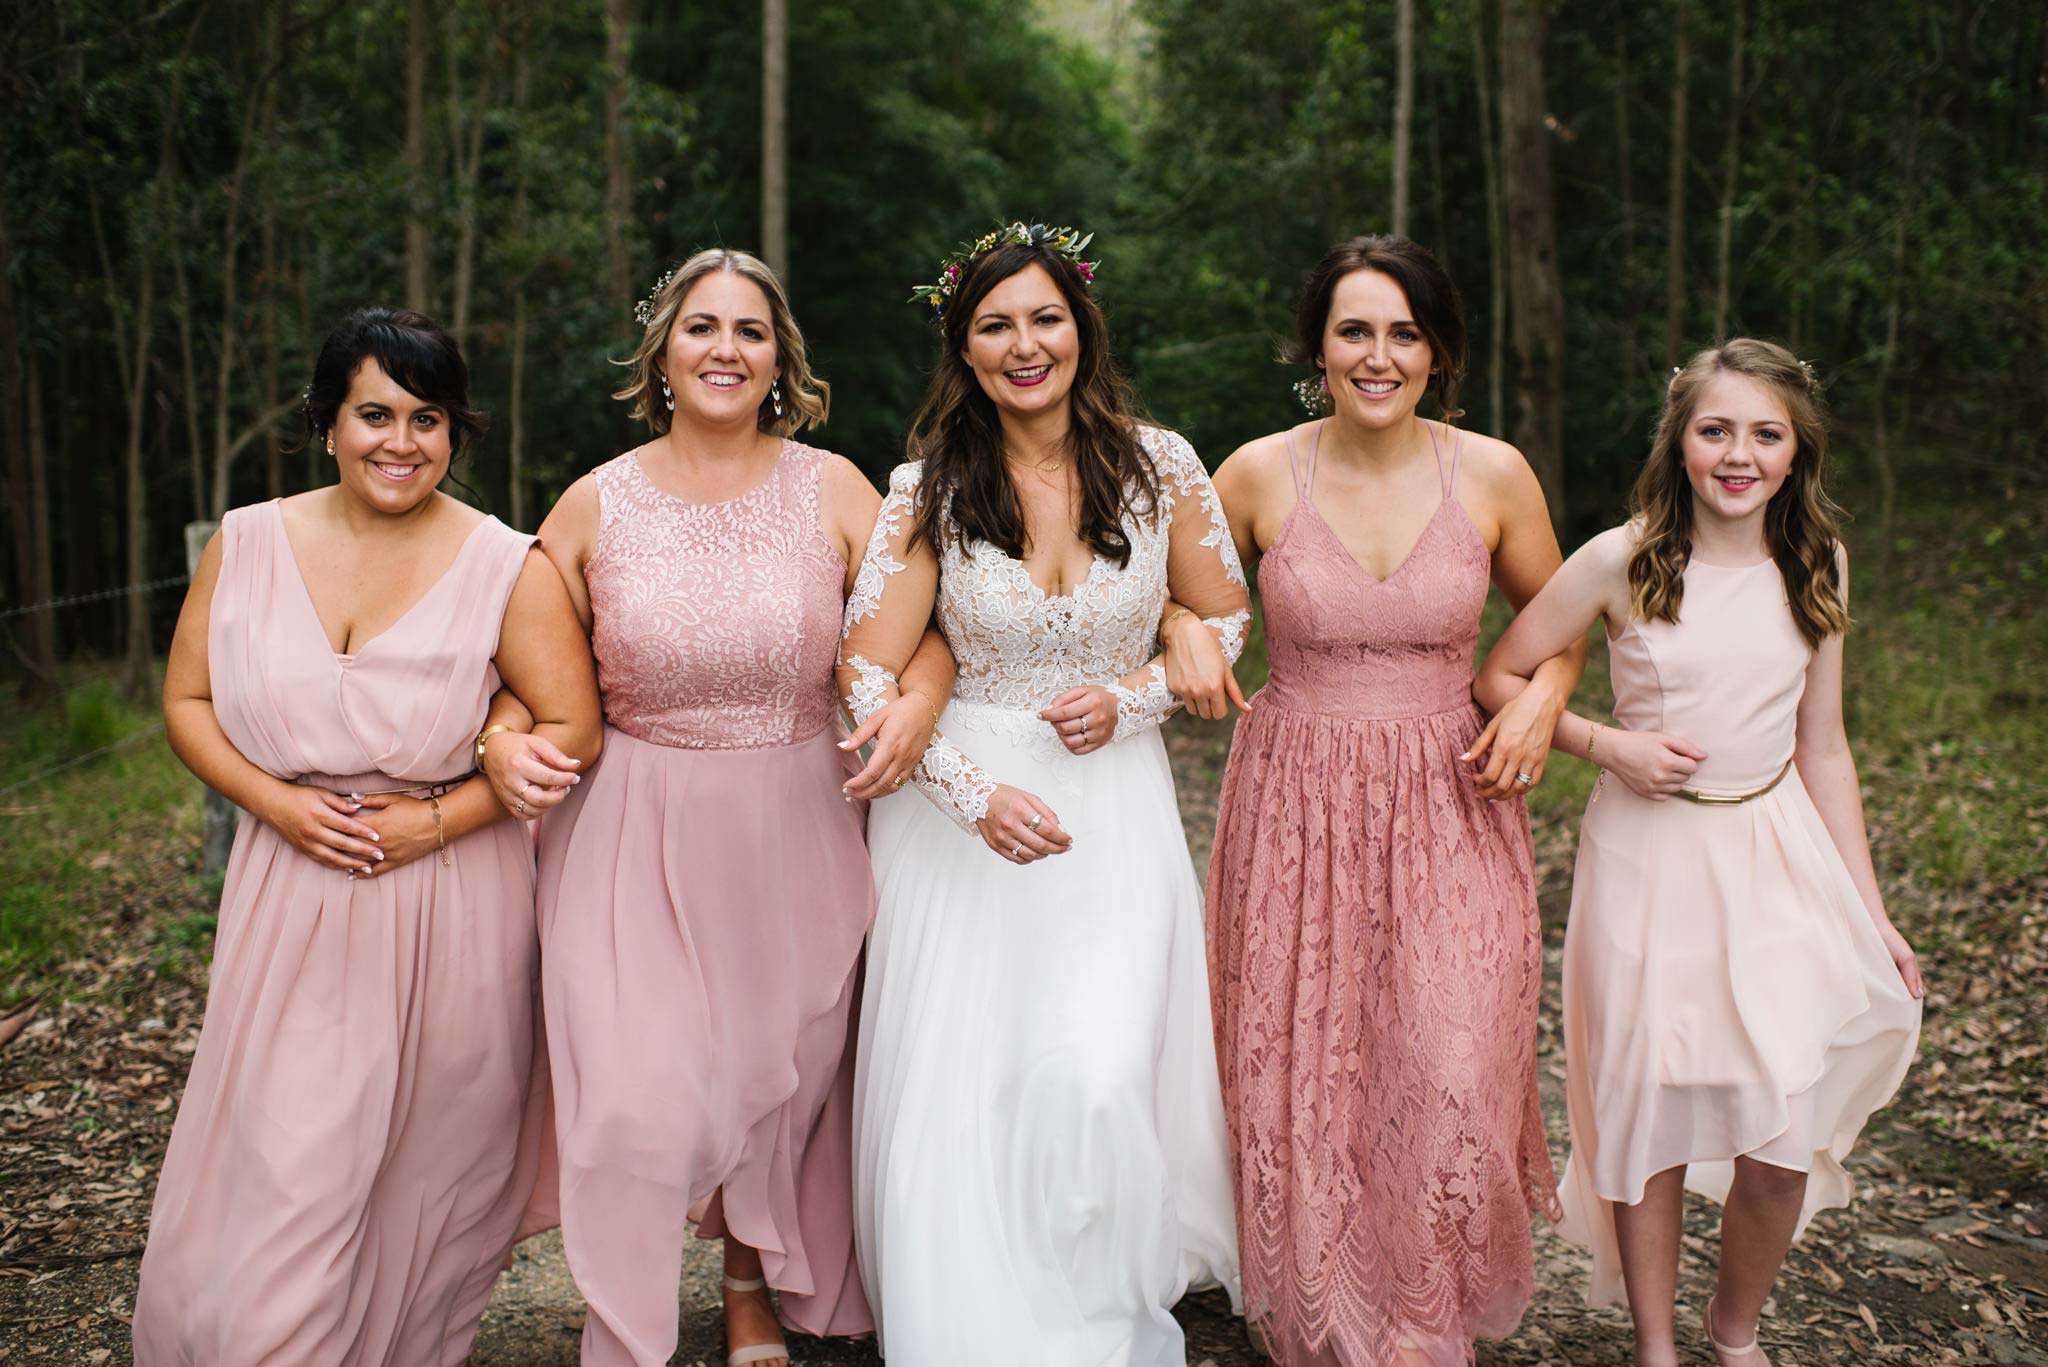 Bride and bridesmaids in various shades of pink